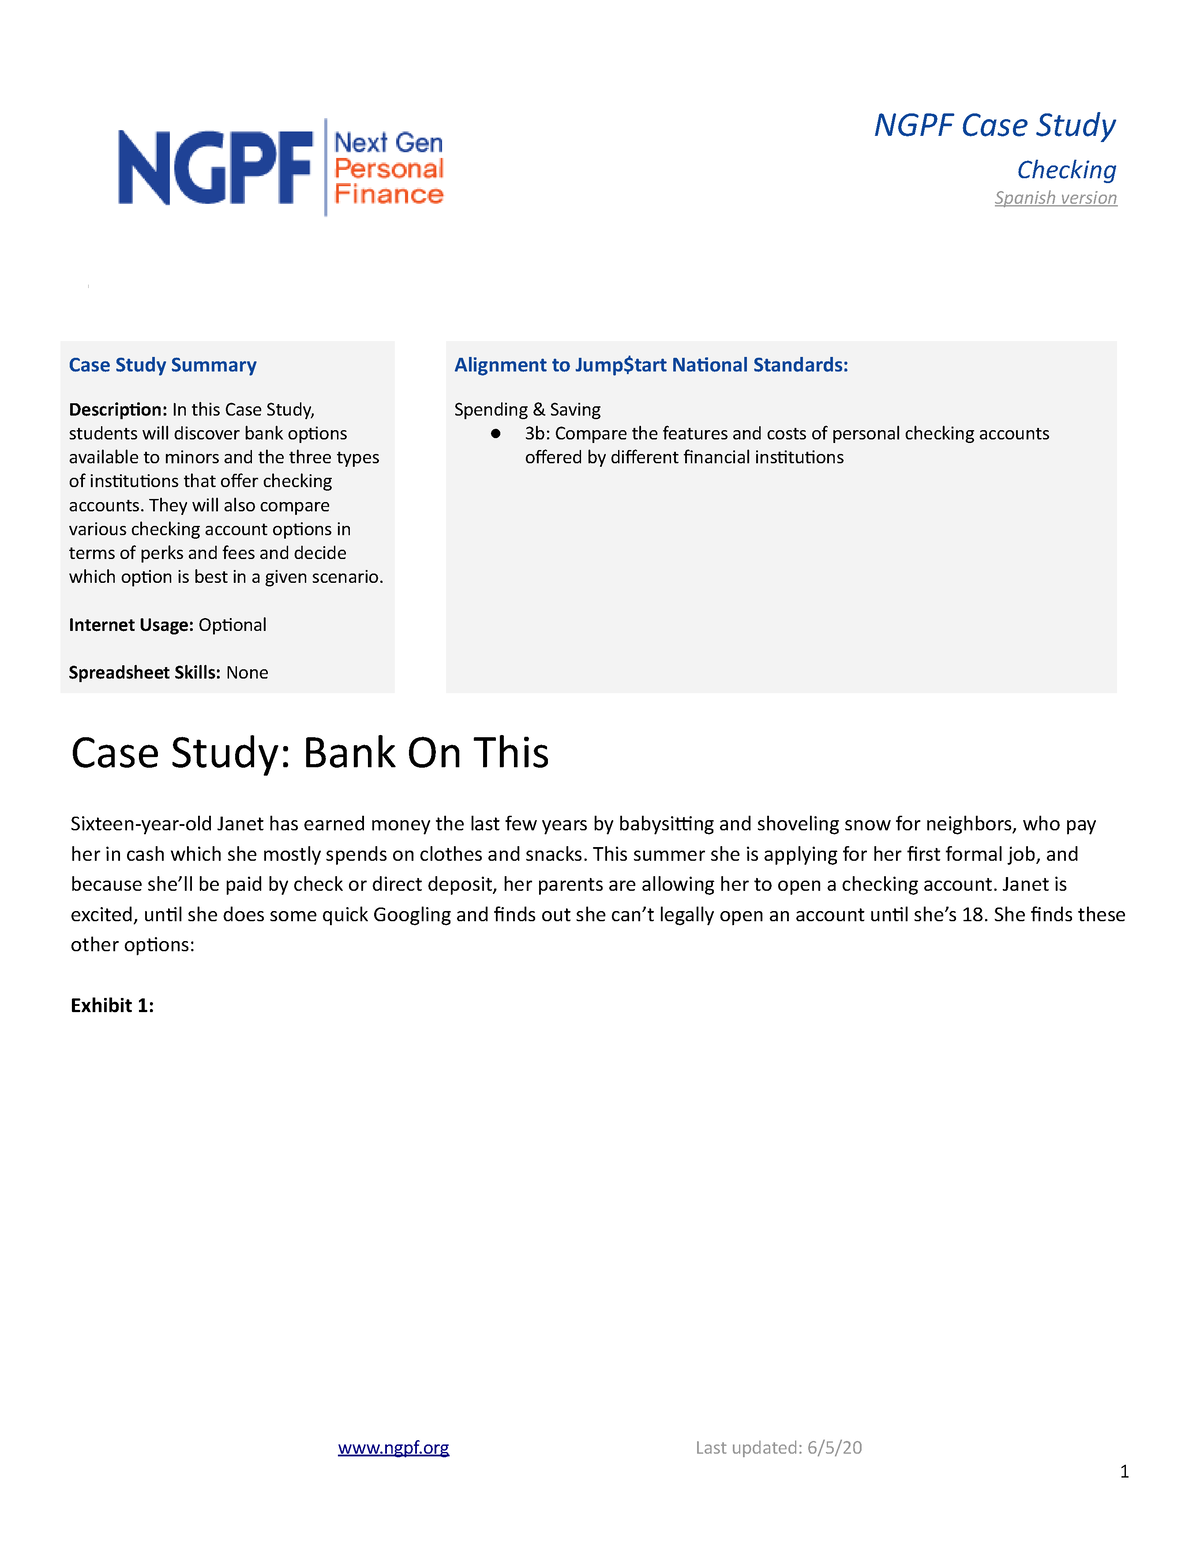 ngpf case study managing credit answer key